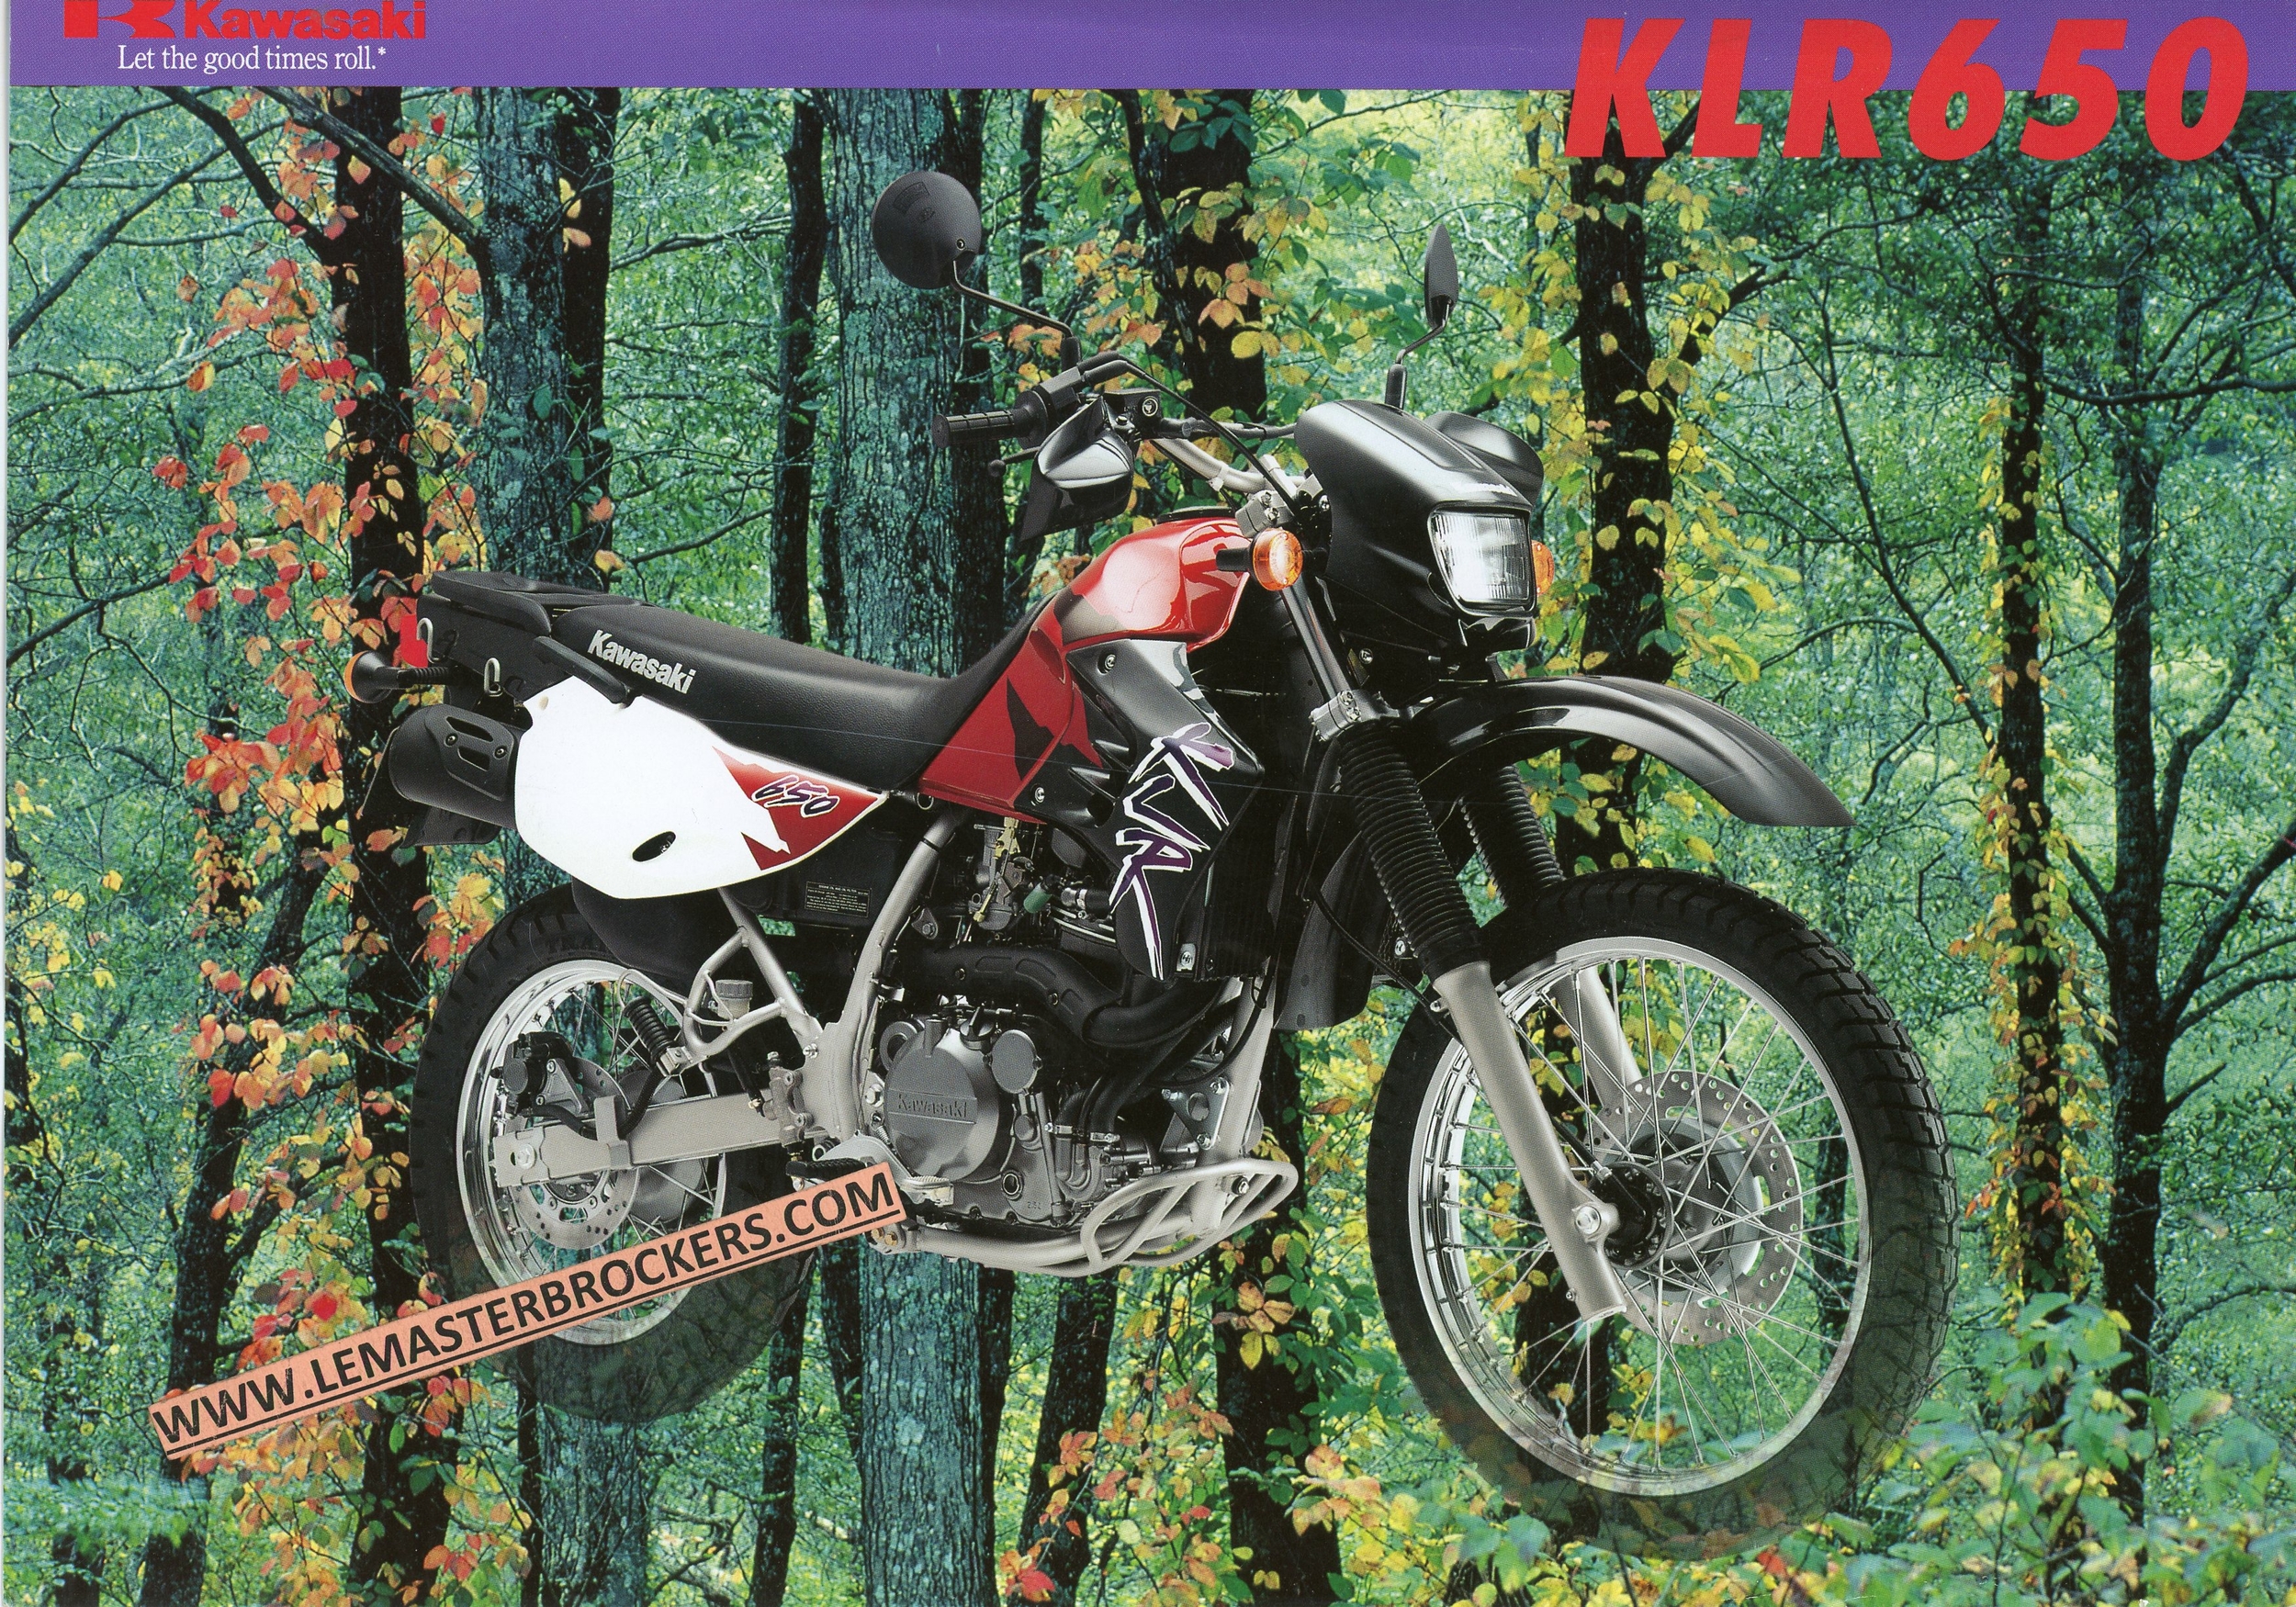 brochure-moto-KAWASAKI-KLR-650-KLR650-lemasterbrockers